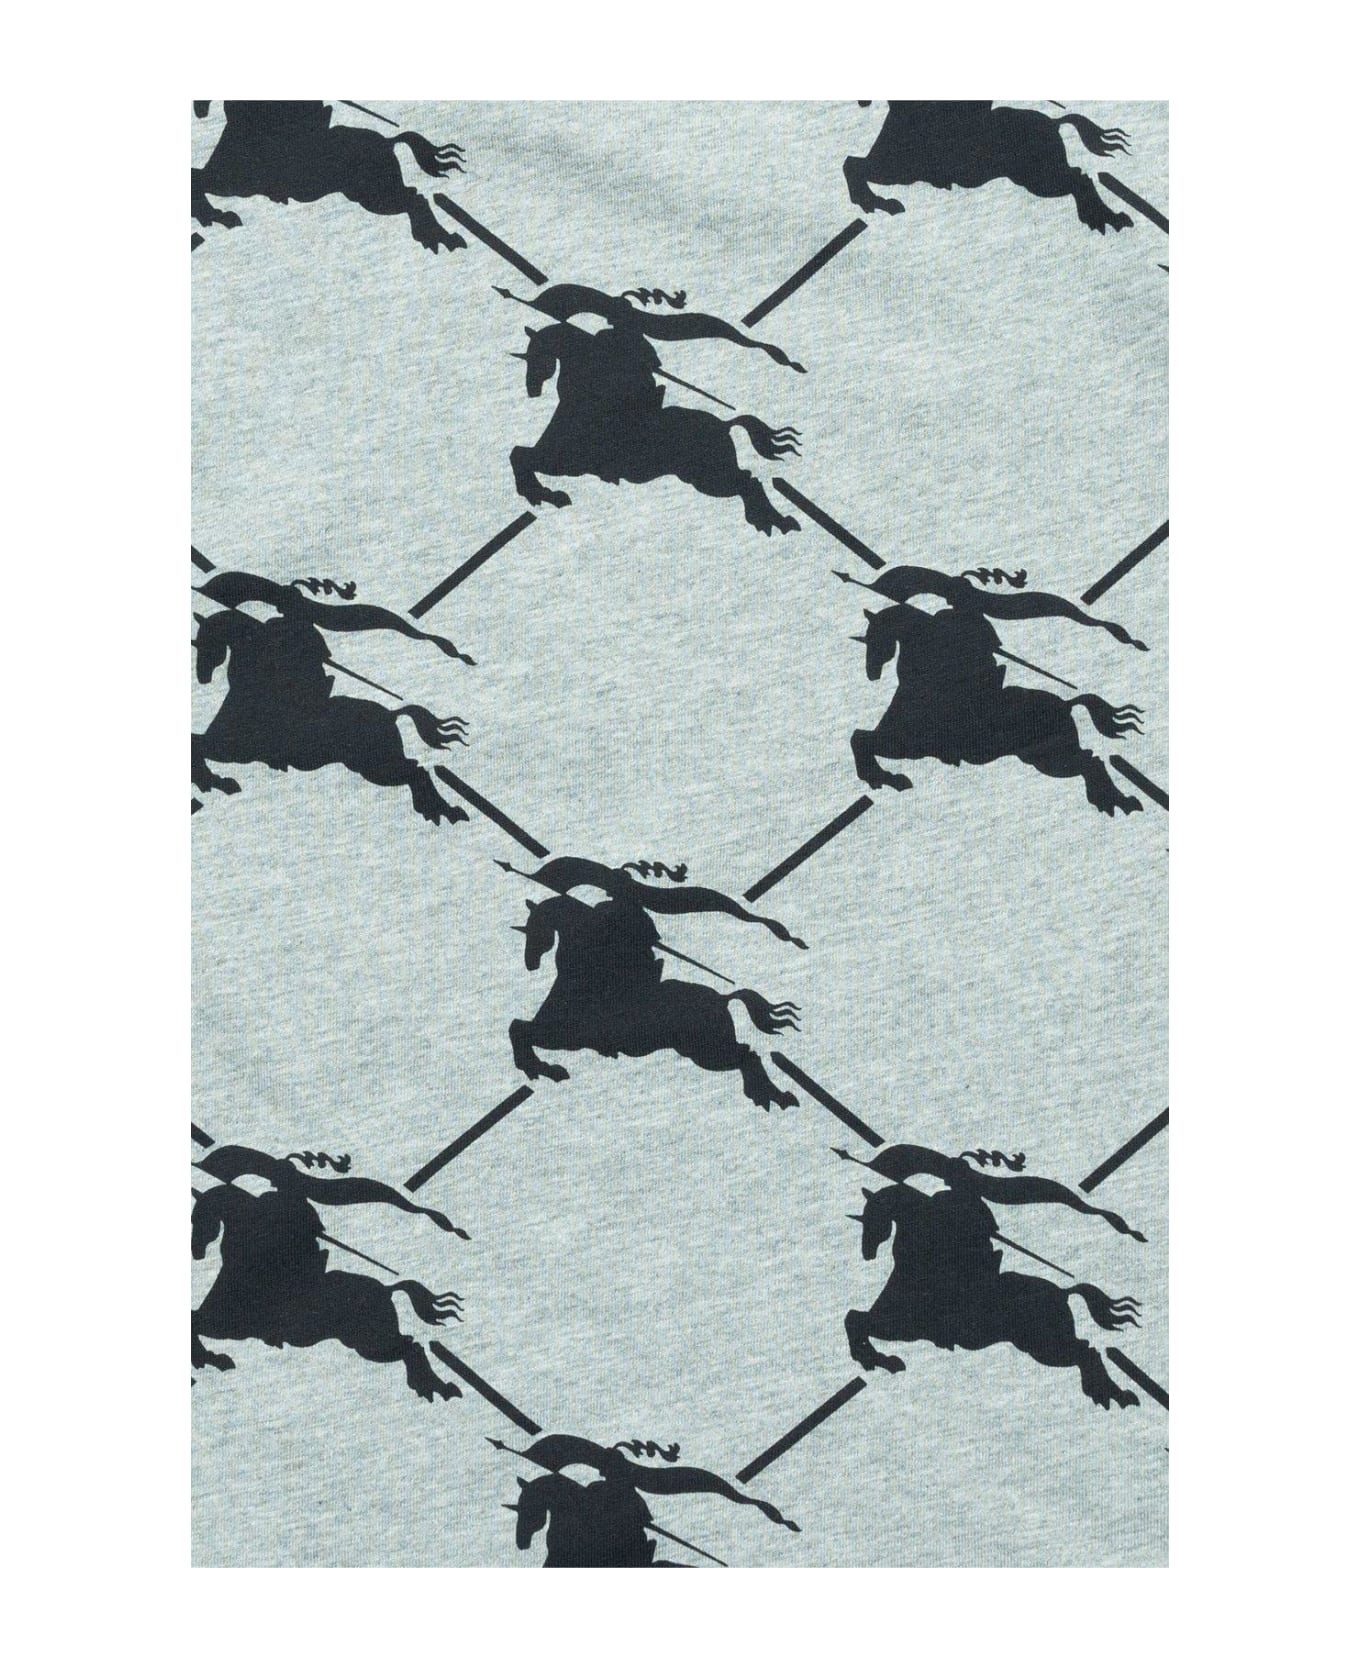 Burberry Equestrian Knight Printed T-shirt - Grigio